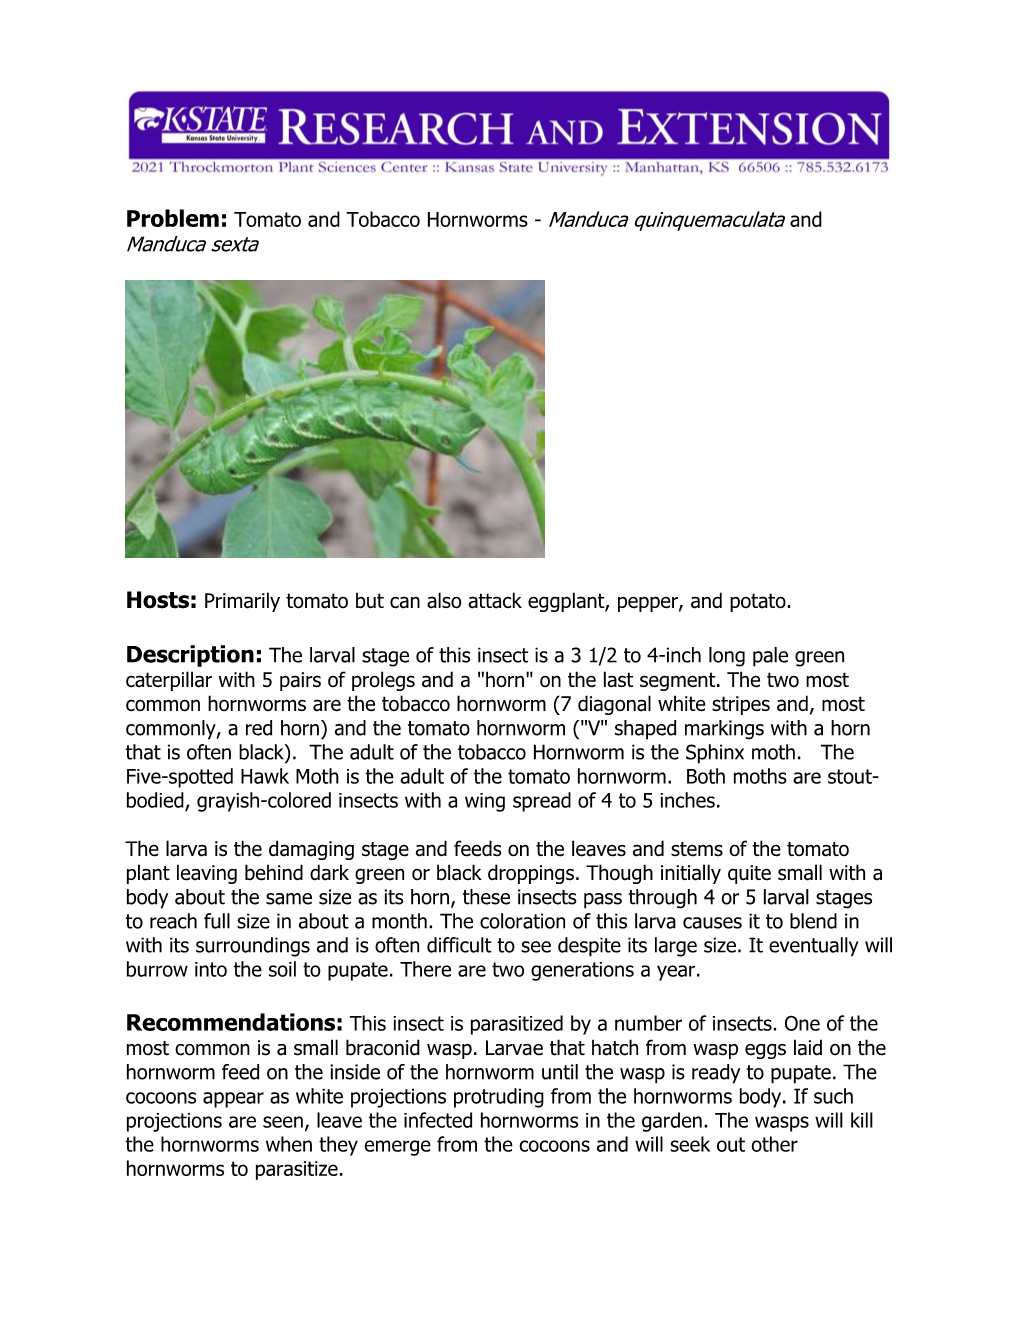 Problem: Tomato and Tobacco Hornworms - Manduca Quinquemaculata and Manduca Sexta